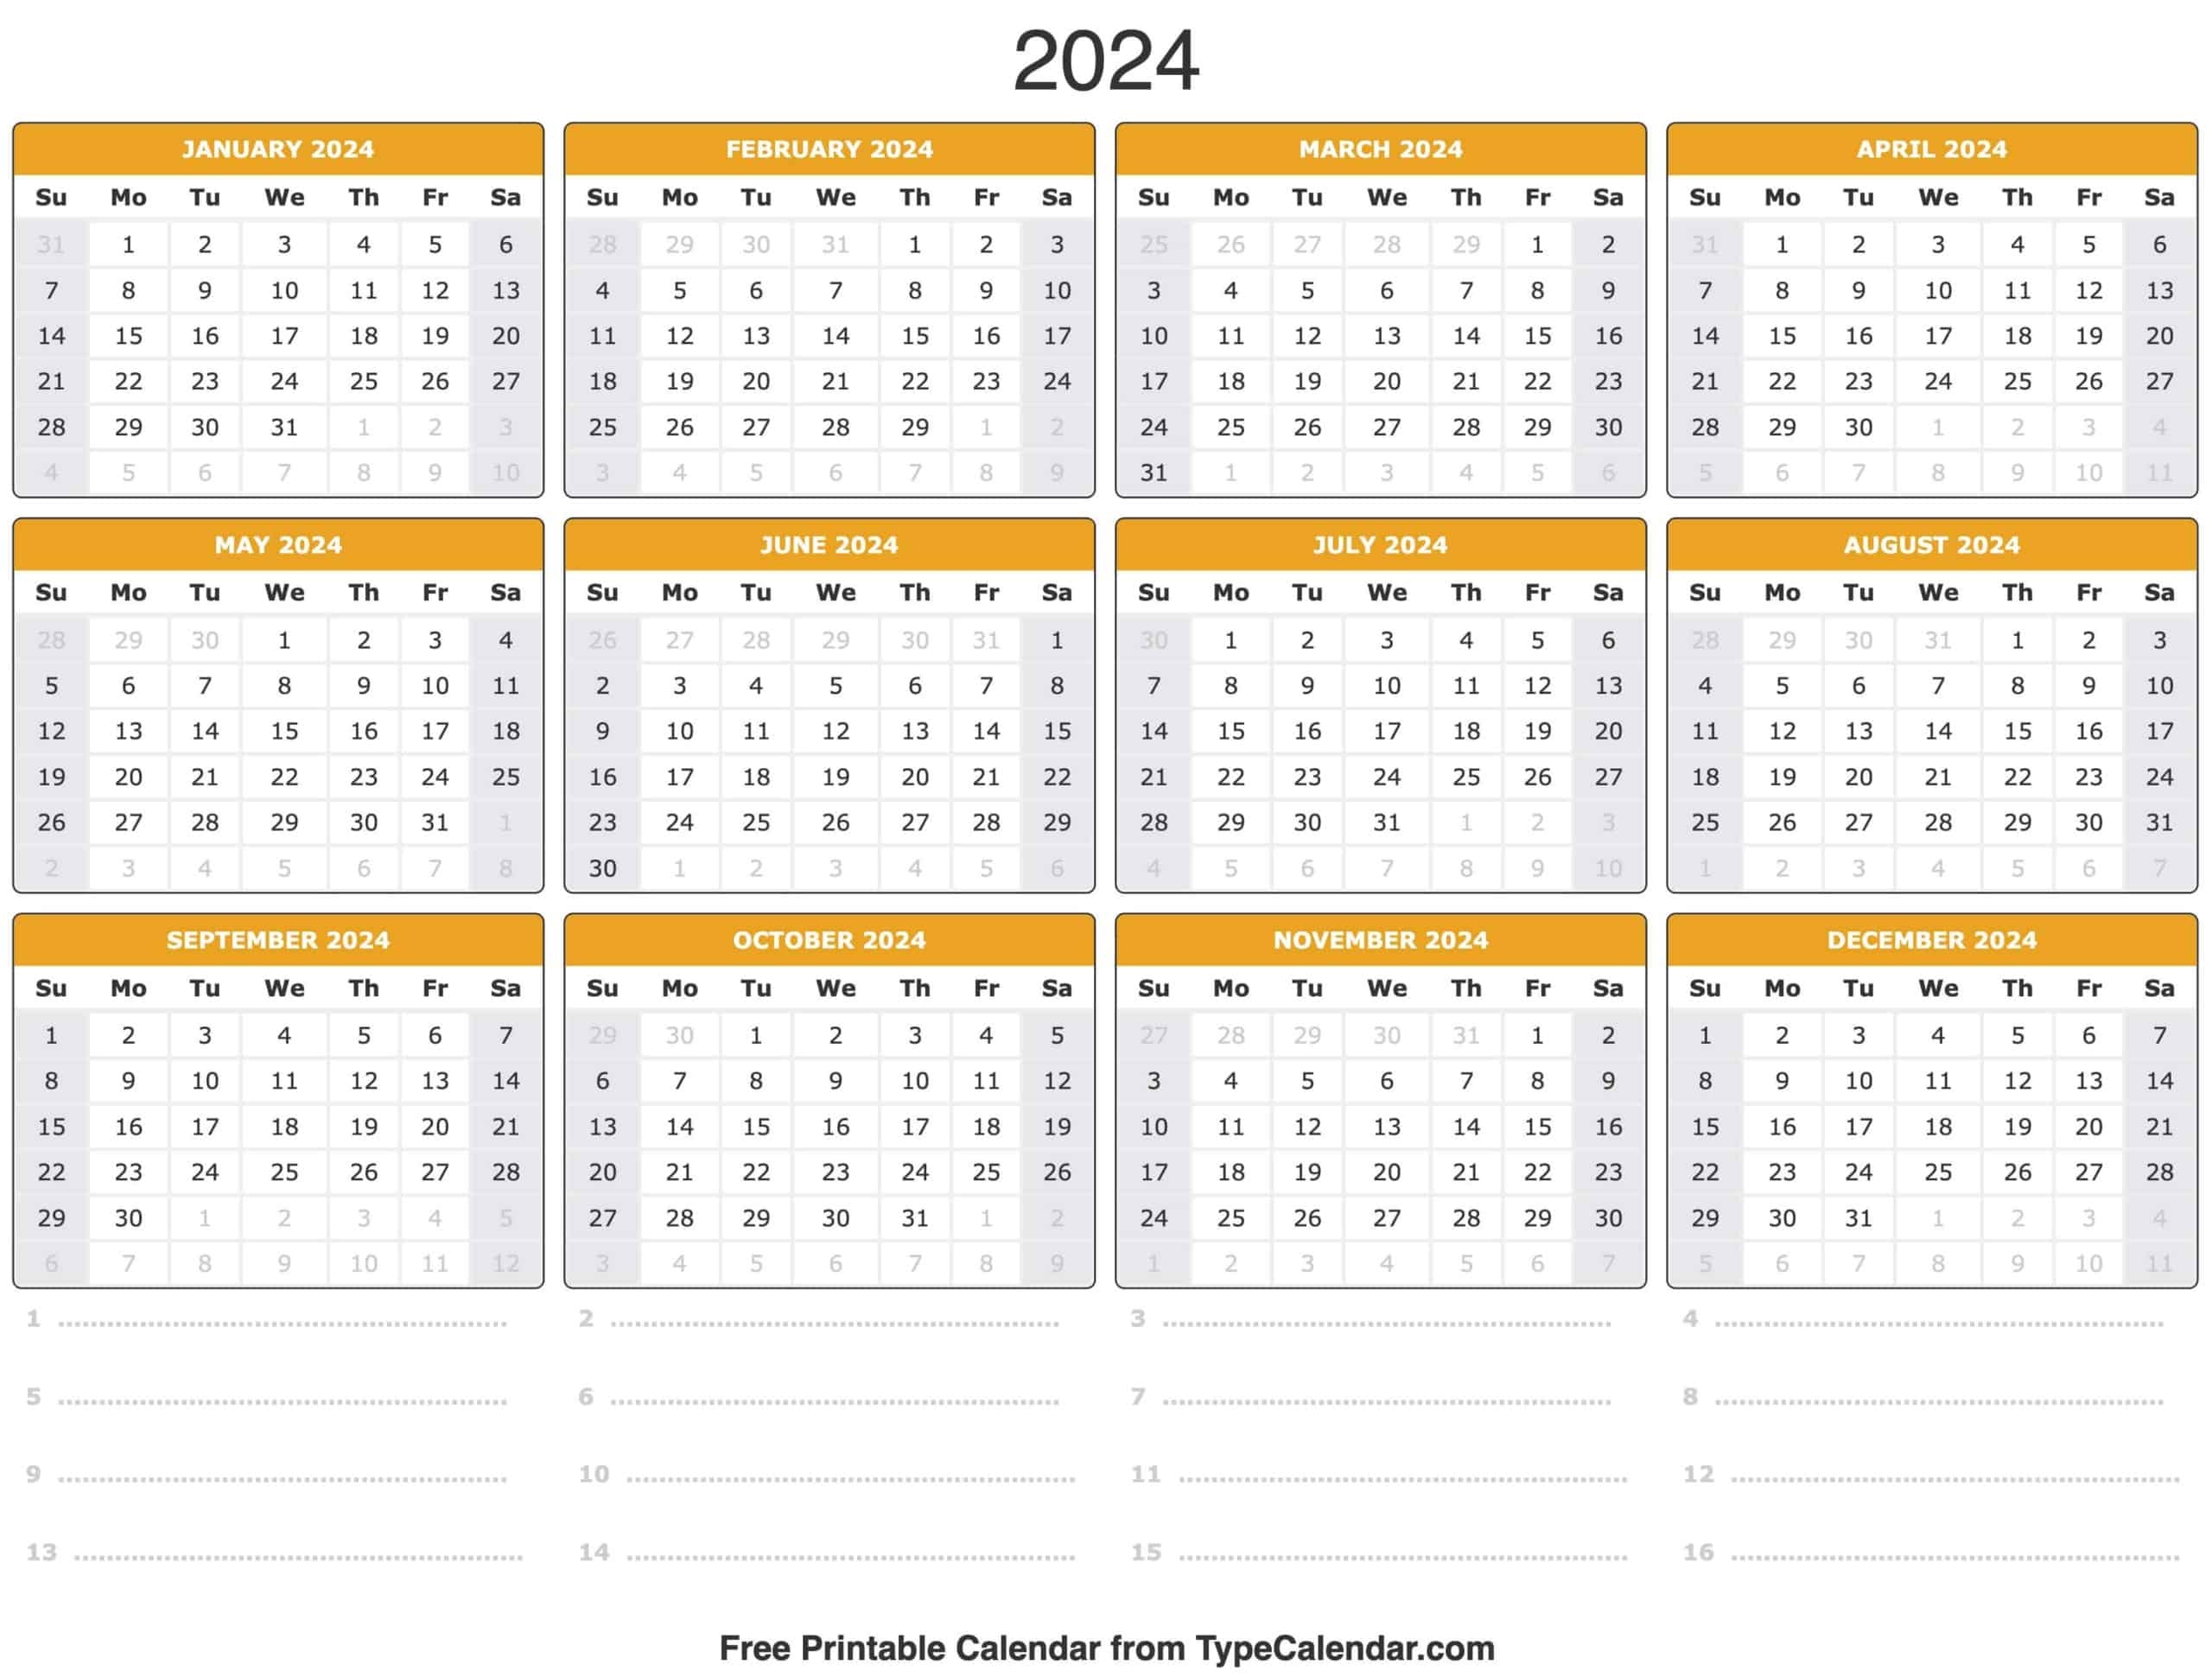 2024 Calendar: Free Printable Calendar With Holidays with regard to Free Printable Calendar 2024-2024